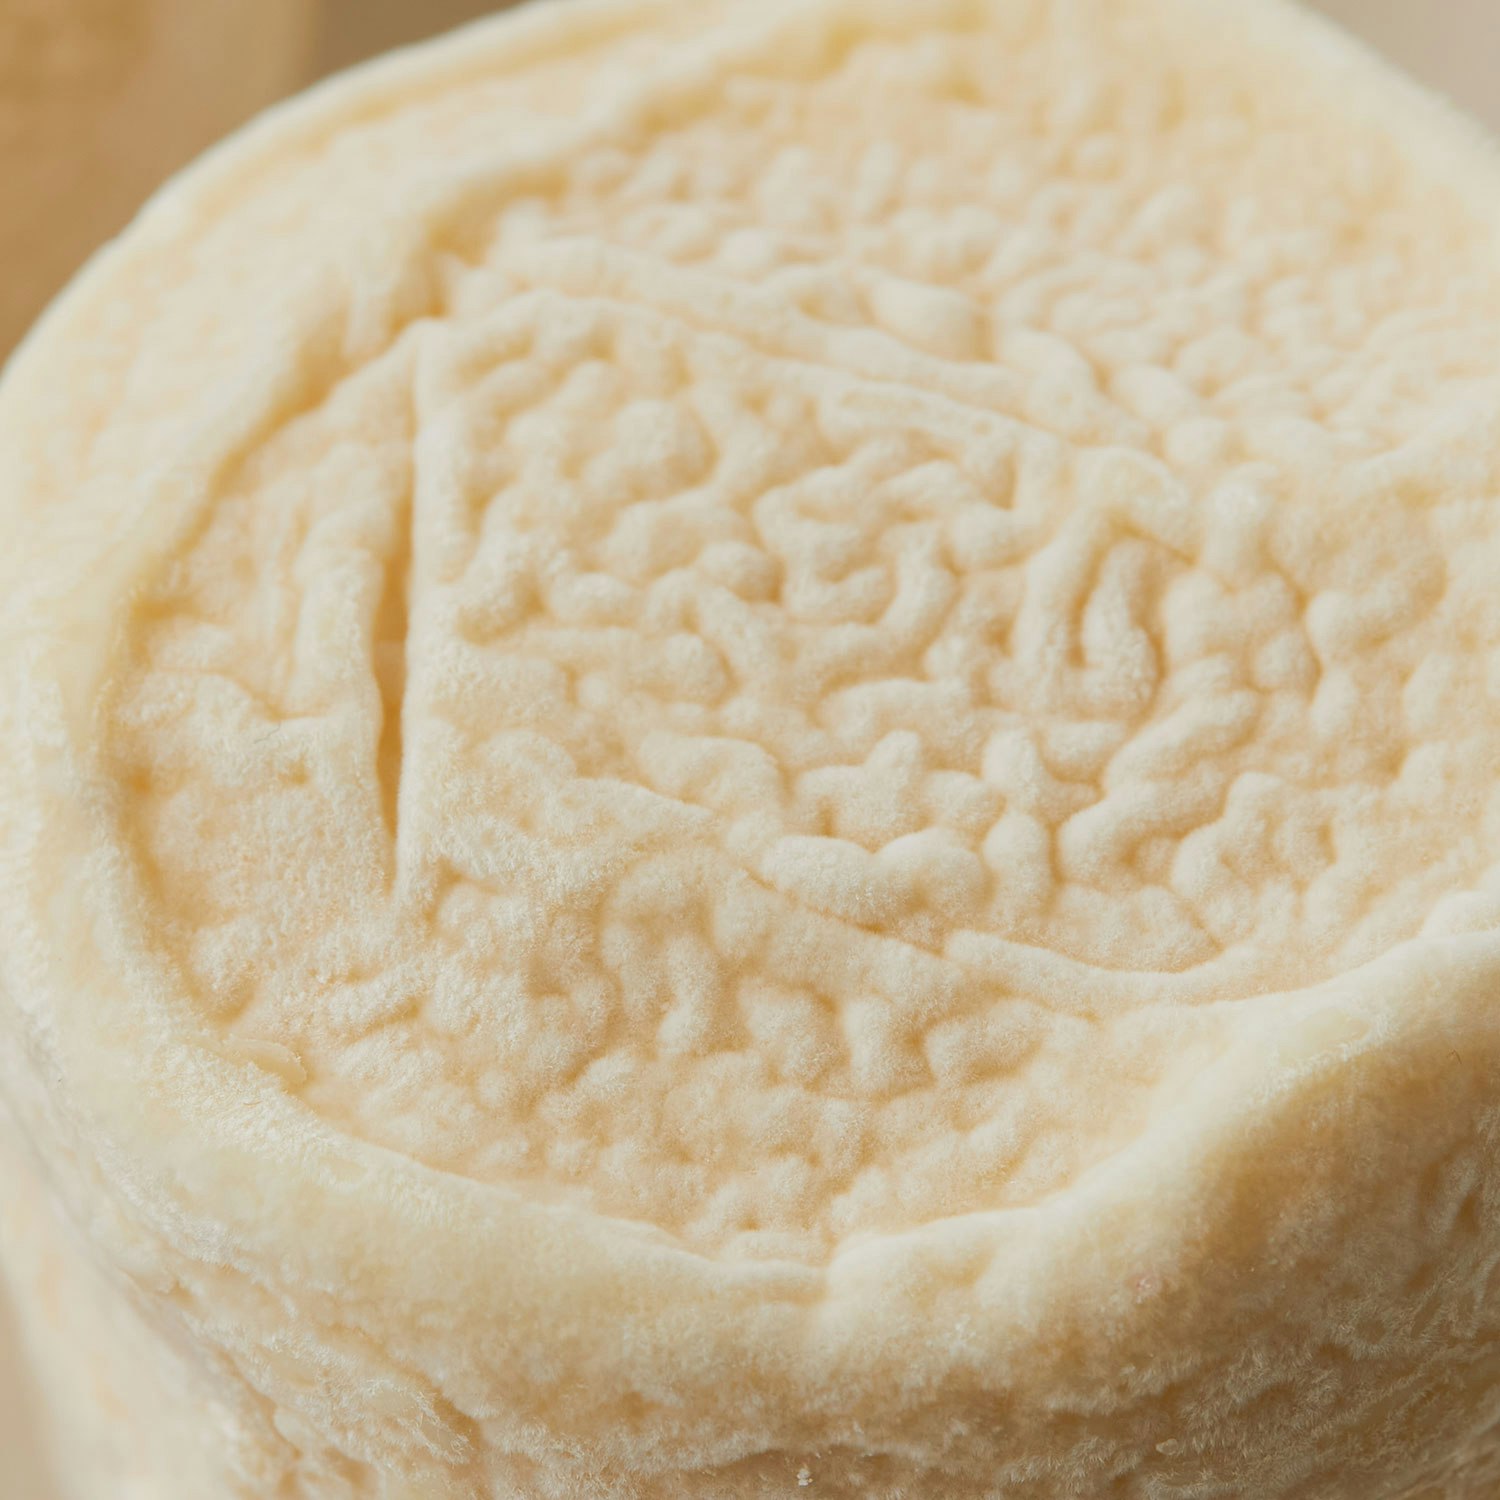 vermont creamery bijou cheese